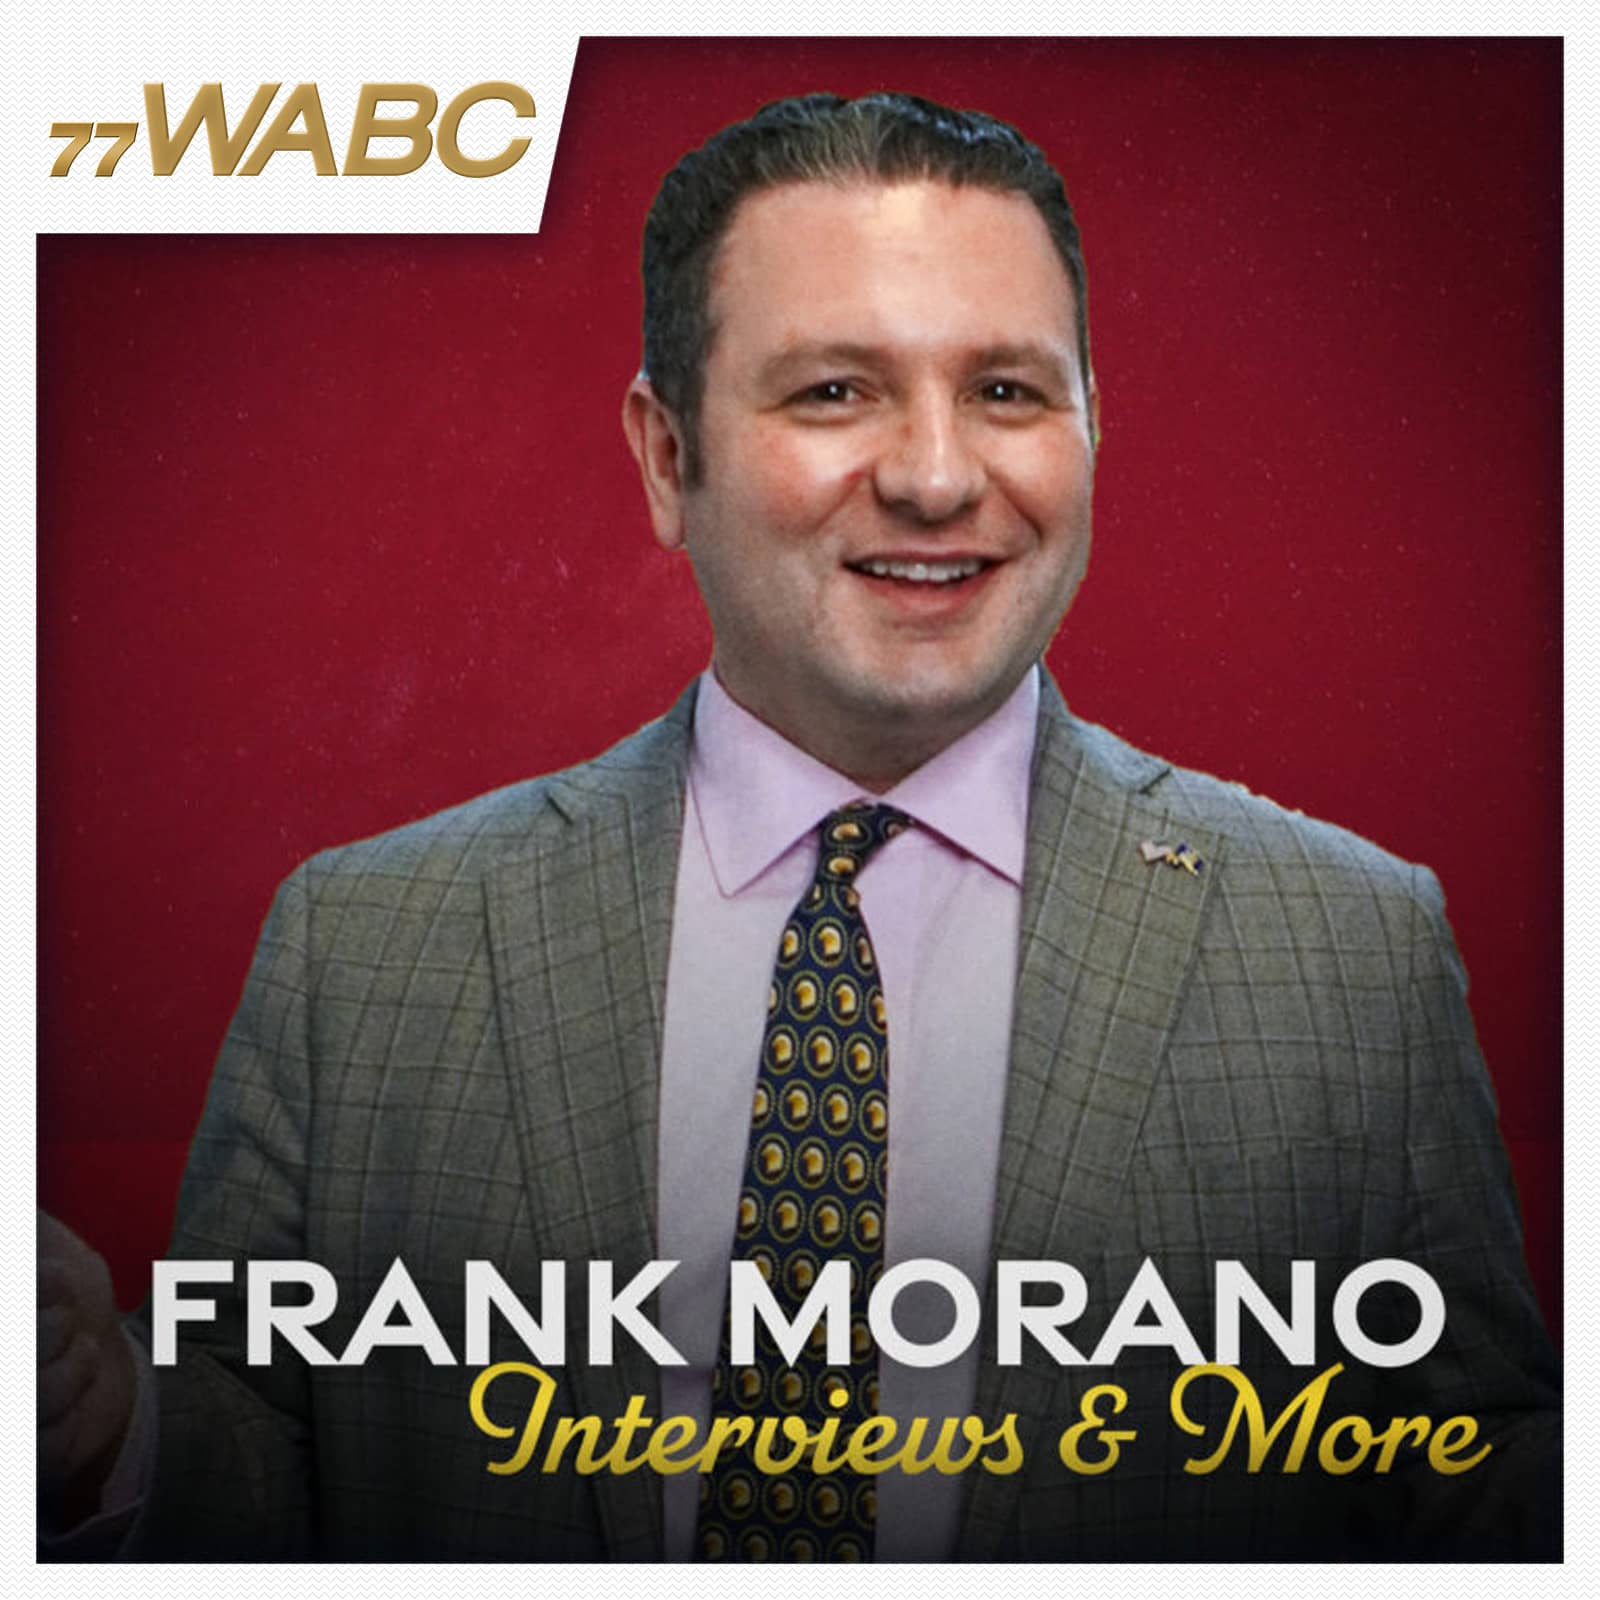 frank-morano-interviews-and-more-podcast-new-logo386041